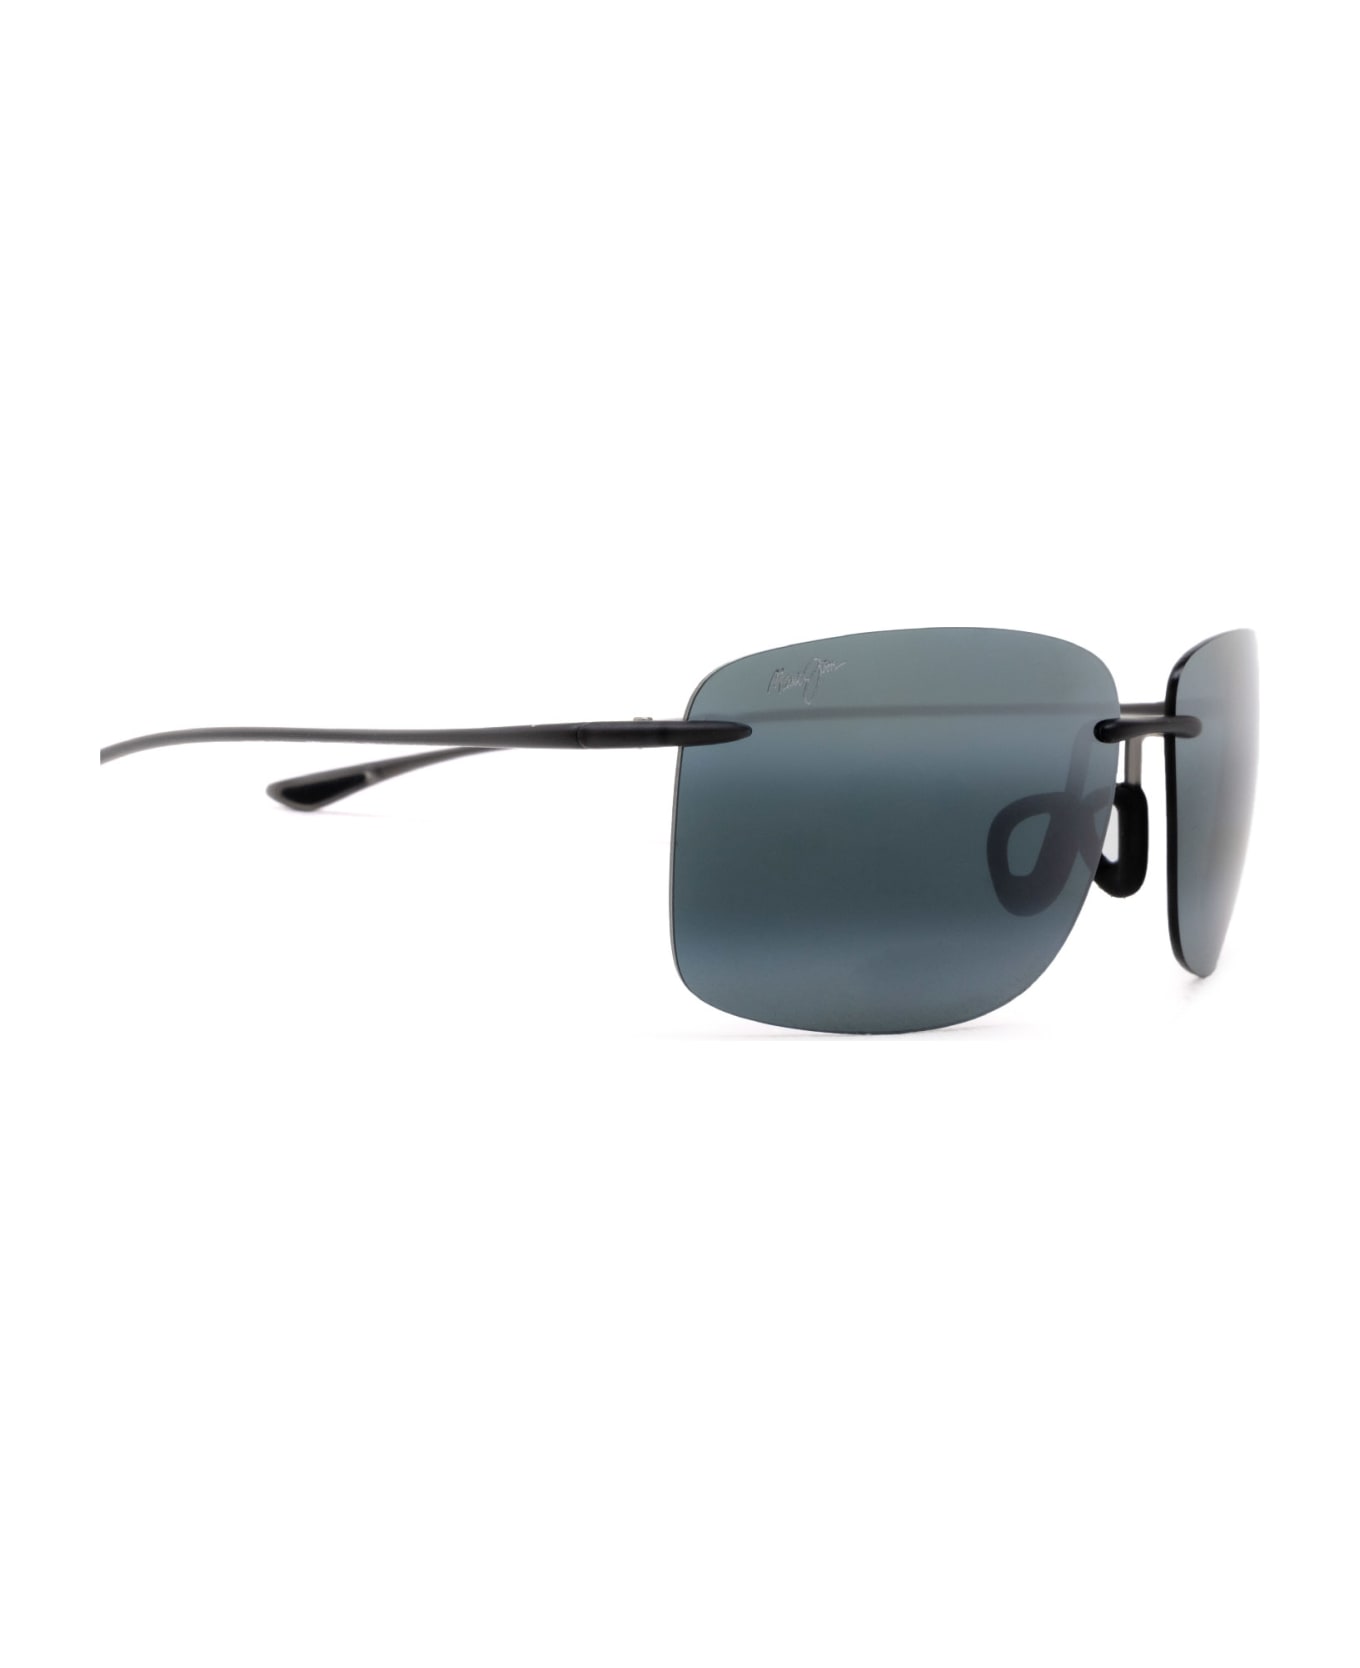 Maui Jim Mj443 Grey Matte Sunglasses - Grey Matte